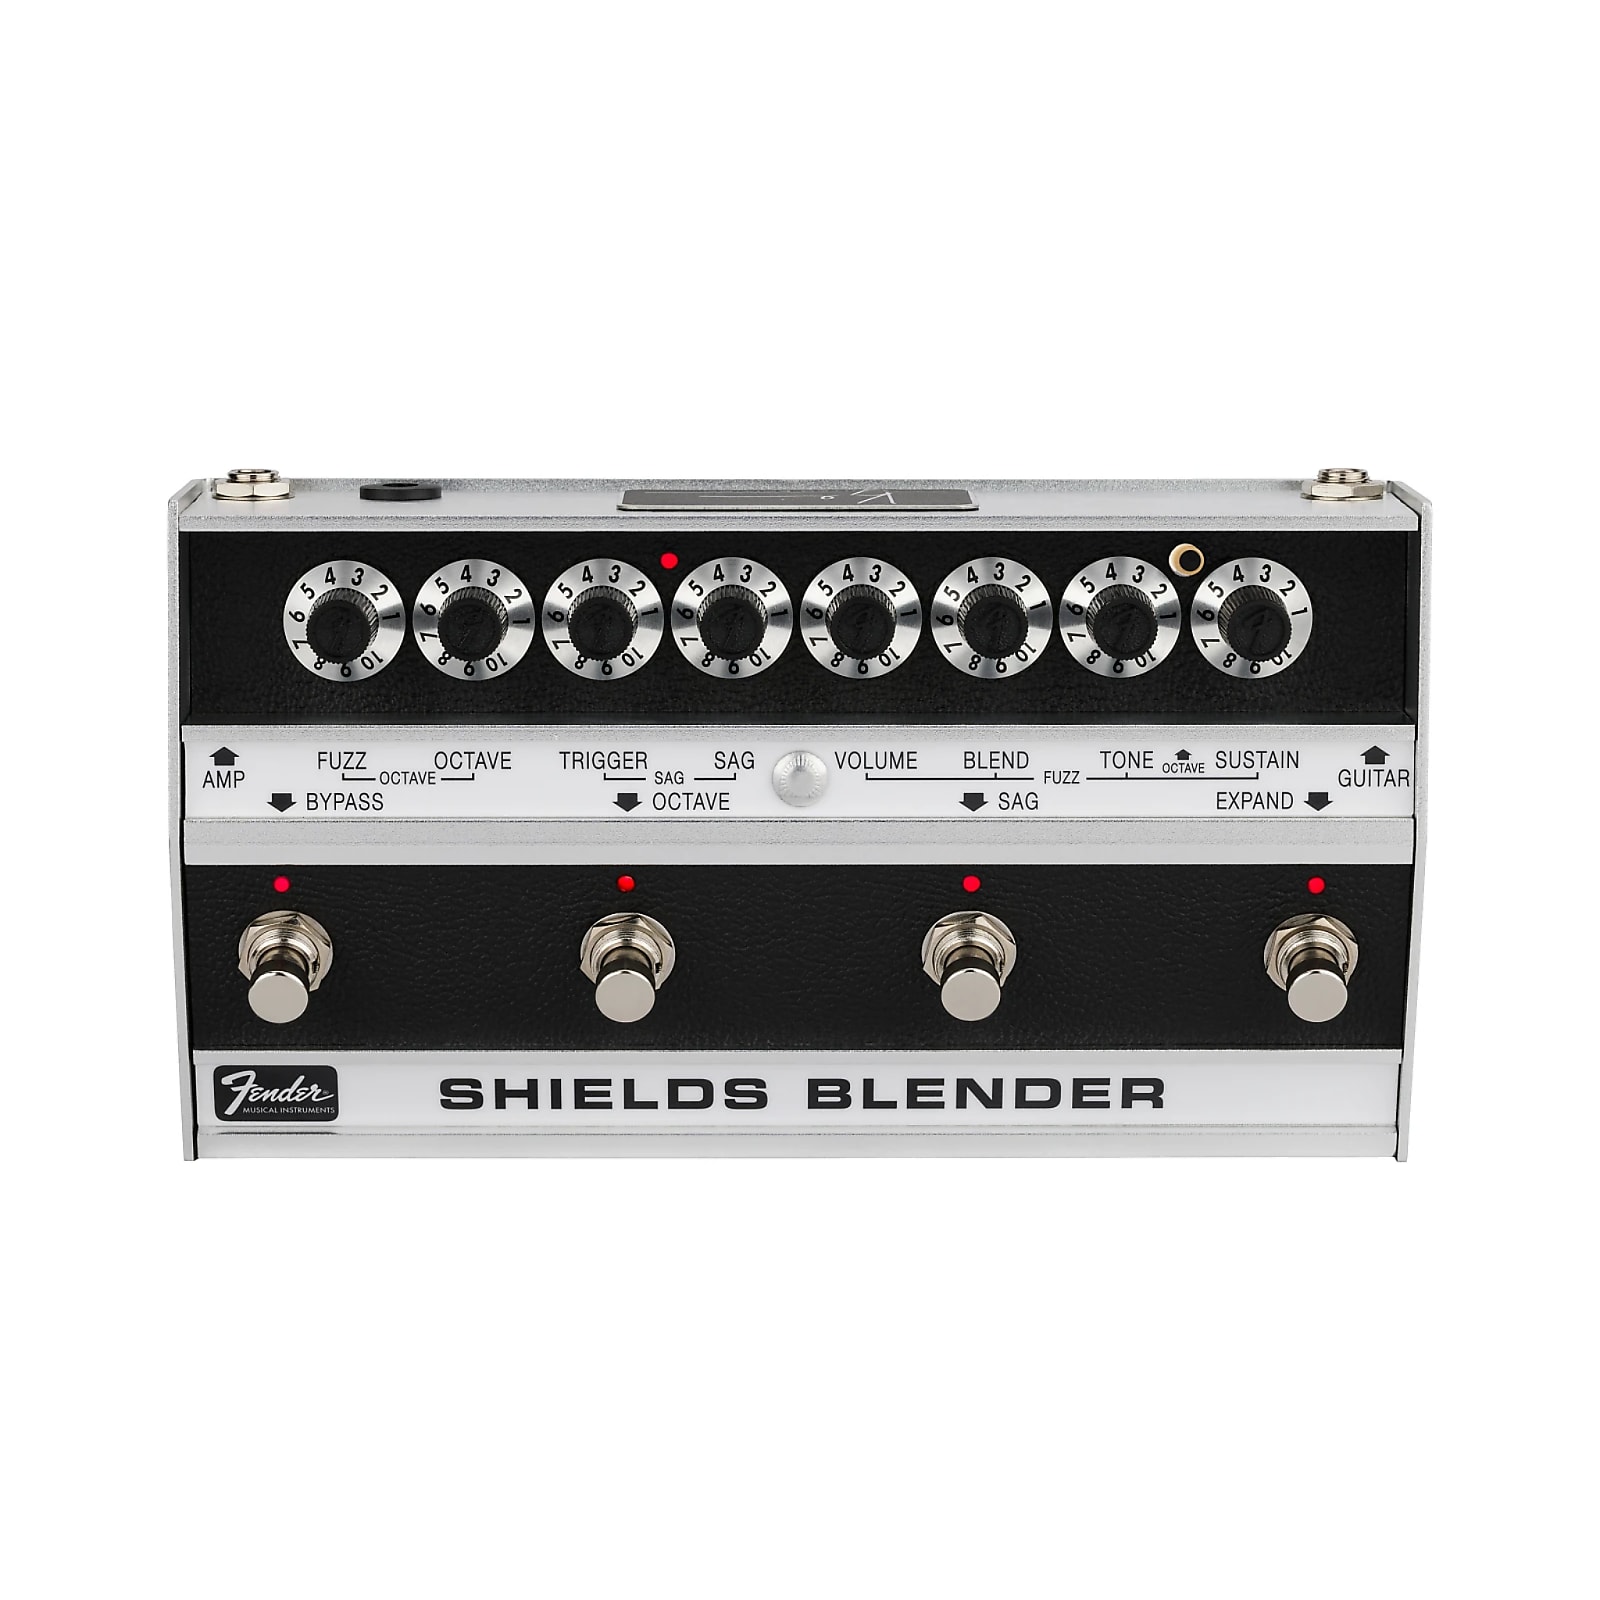 Fender Shields Blender Limited Edition | Reverb